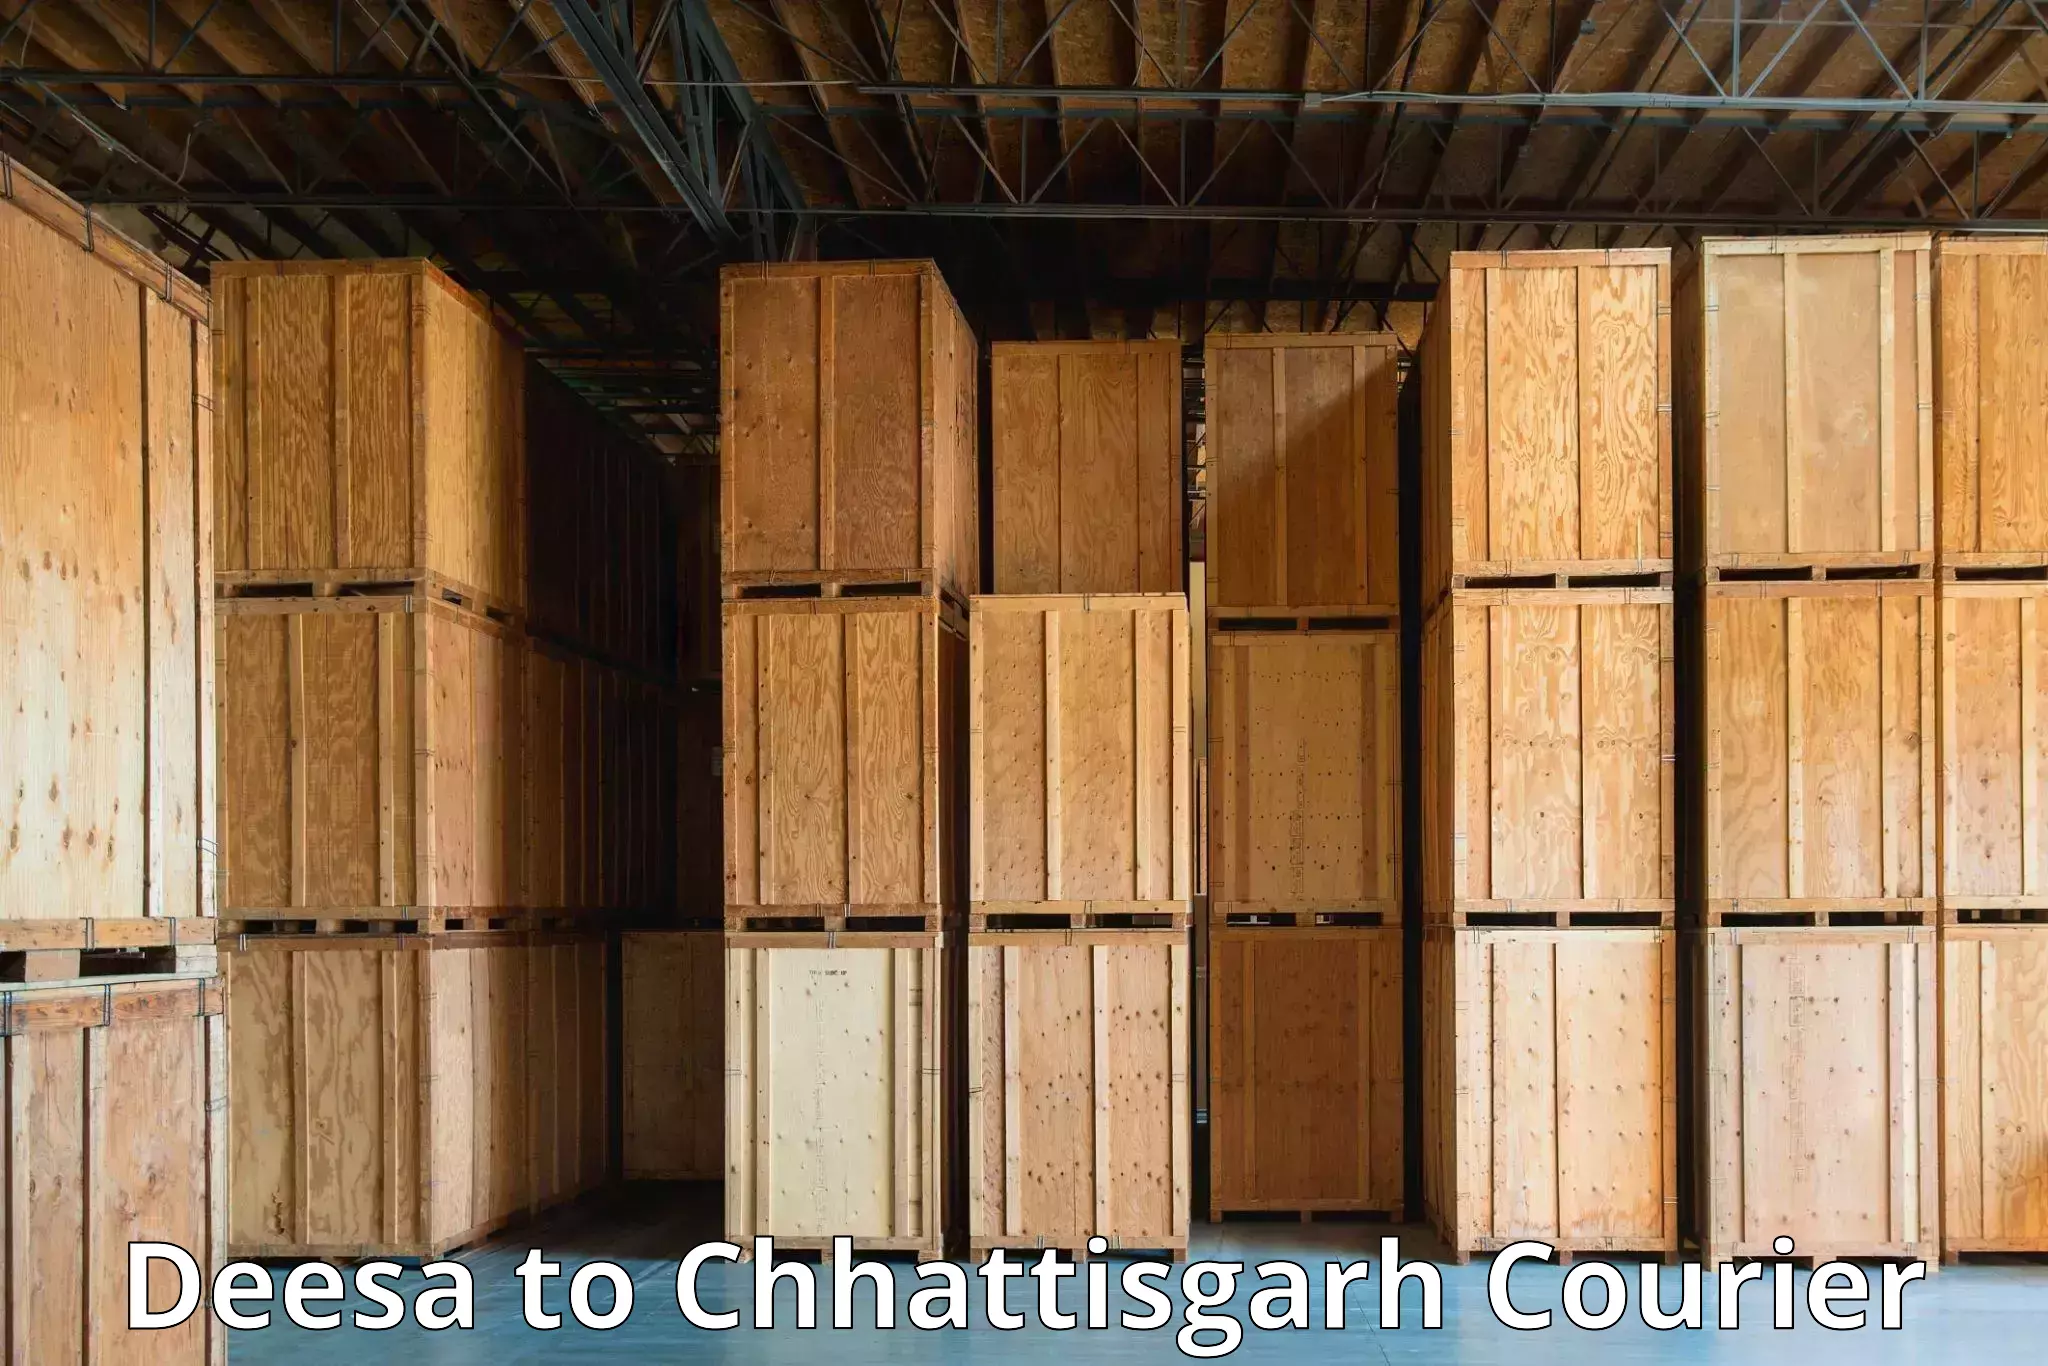 24-hour courier service Deesa to Patna Chhattisgarh